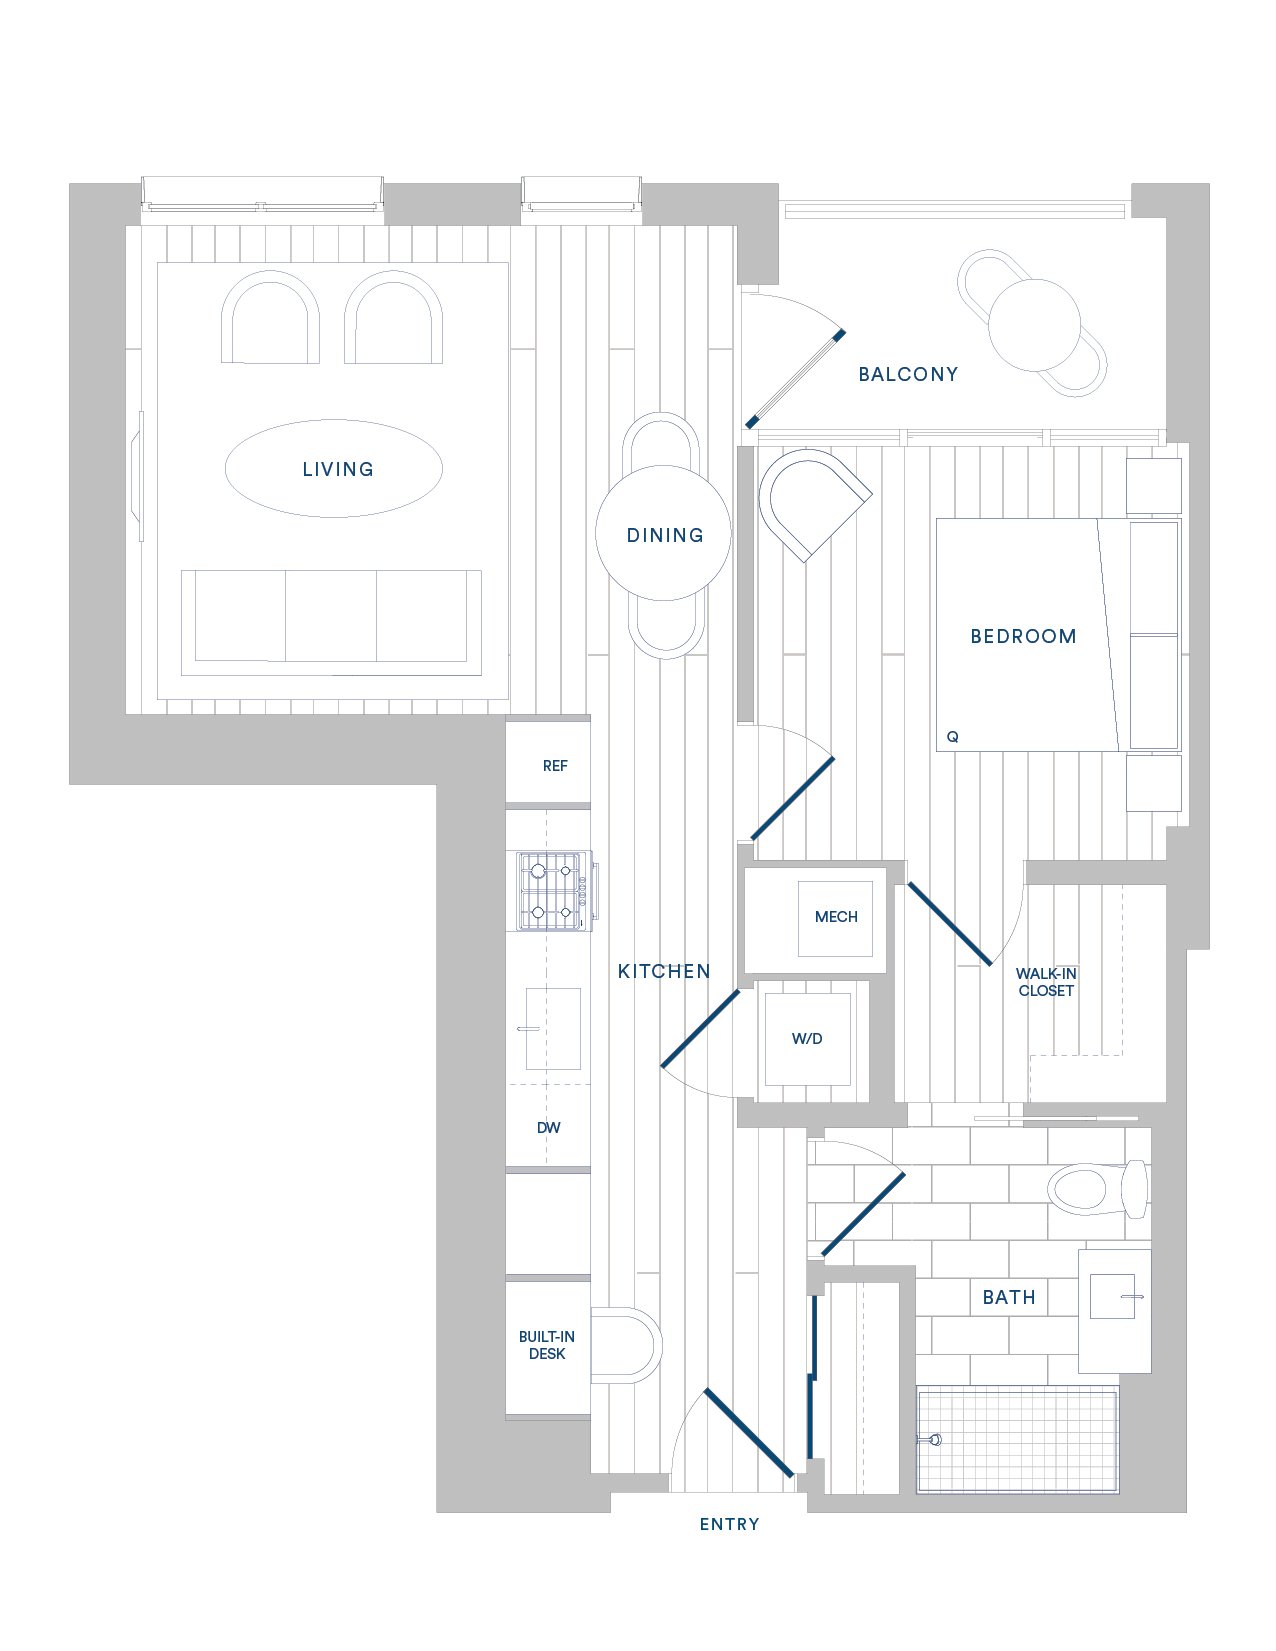 Floorplan for Apartment #606, 1 bedroom unit at Margarite